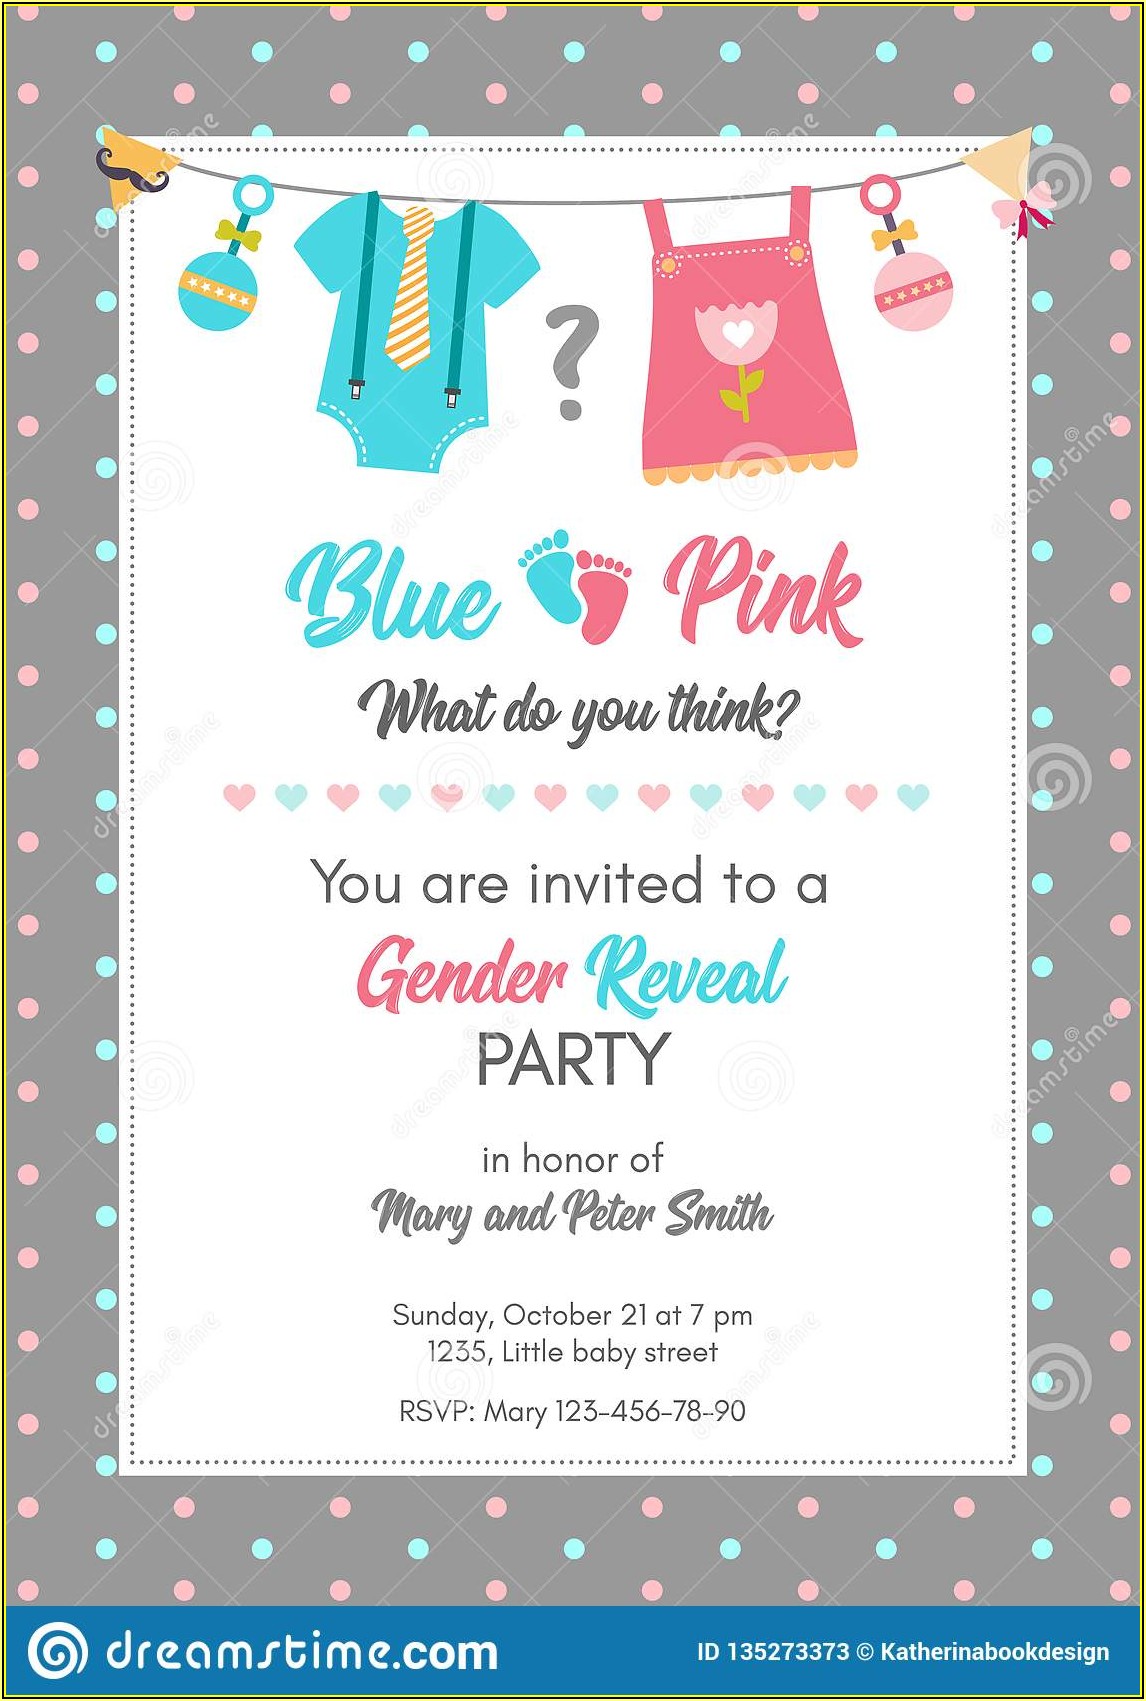 Gender Reveal Party Invitation Maker